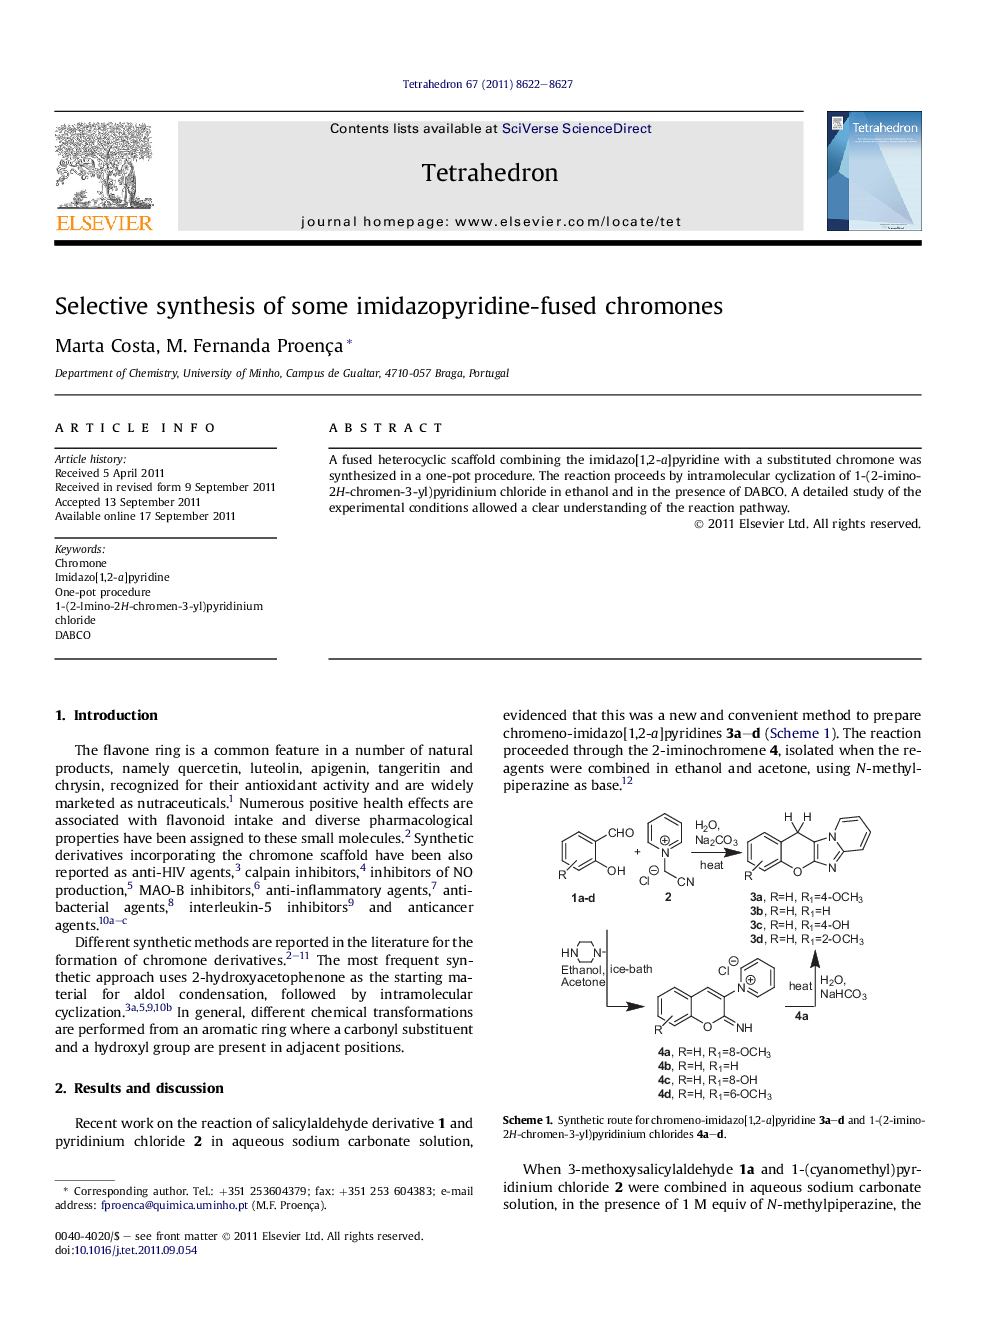 Selective synthesis of some imidazopyridine-fused chromones